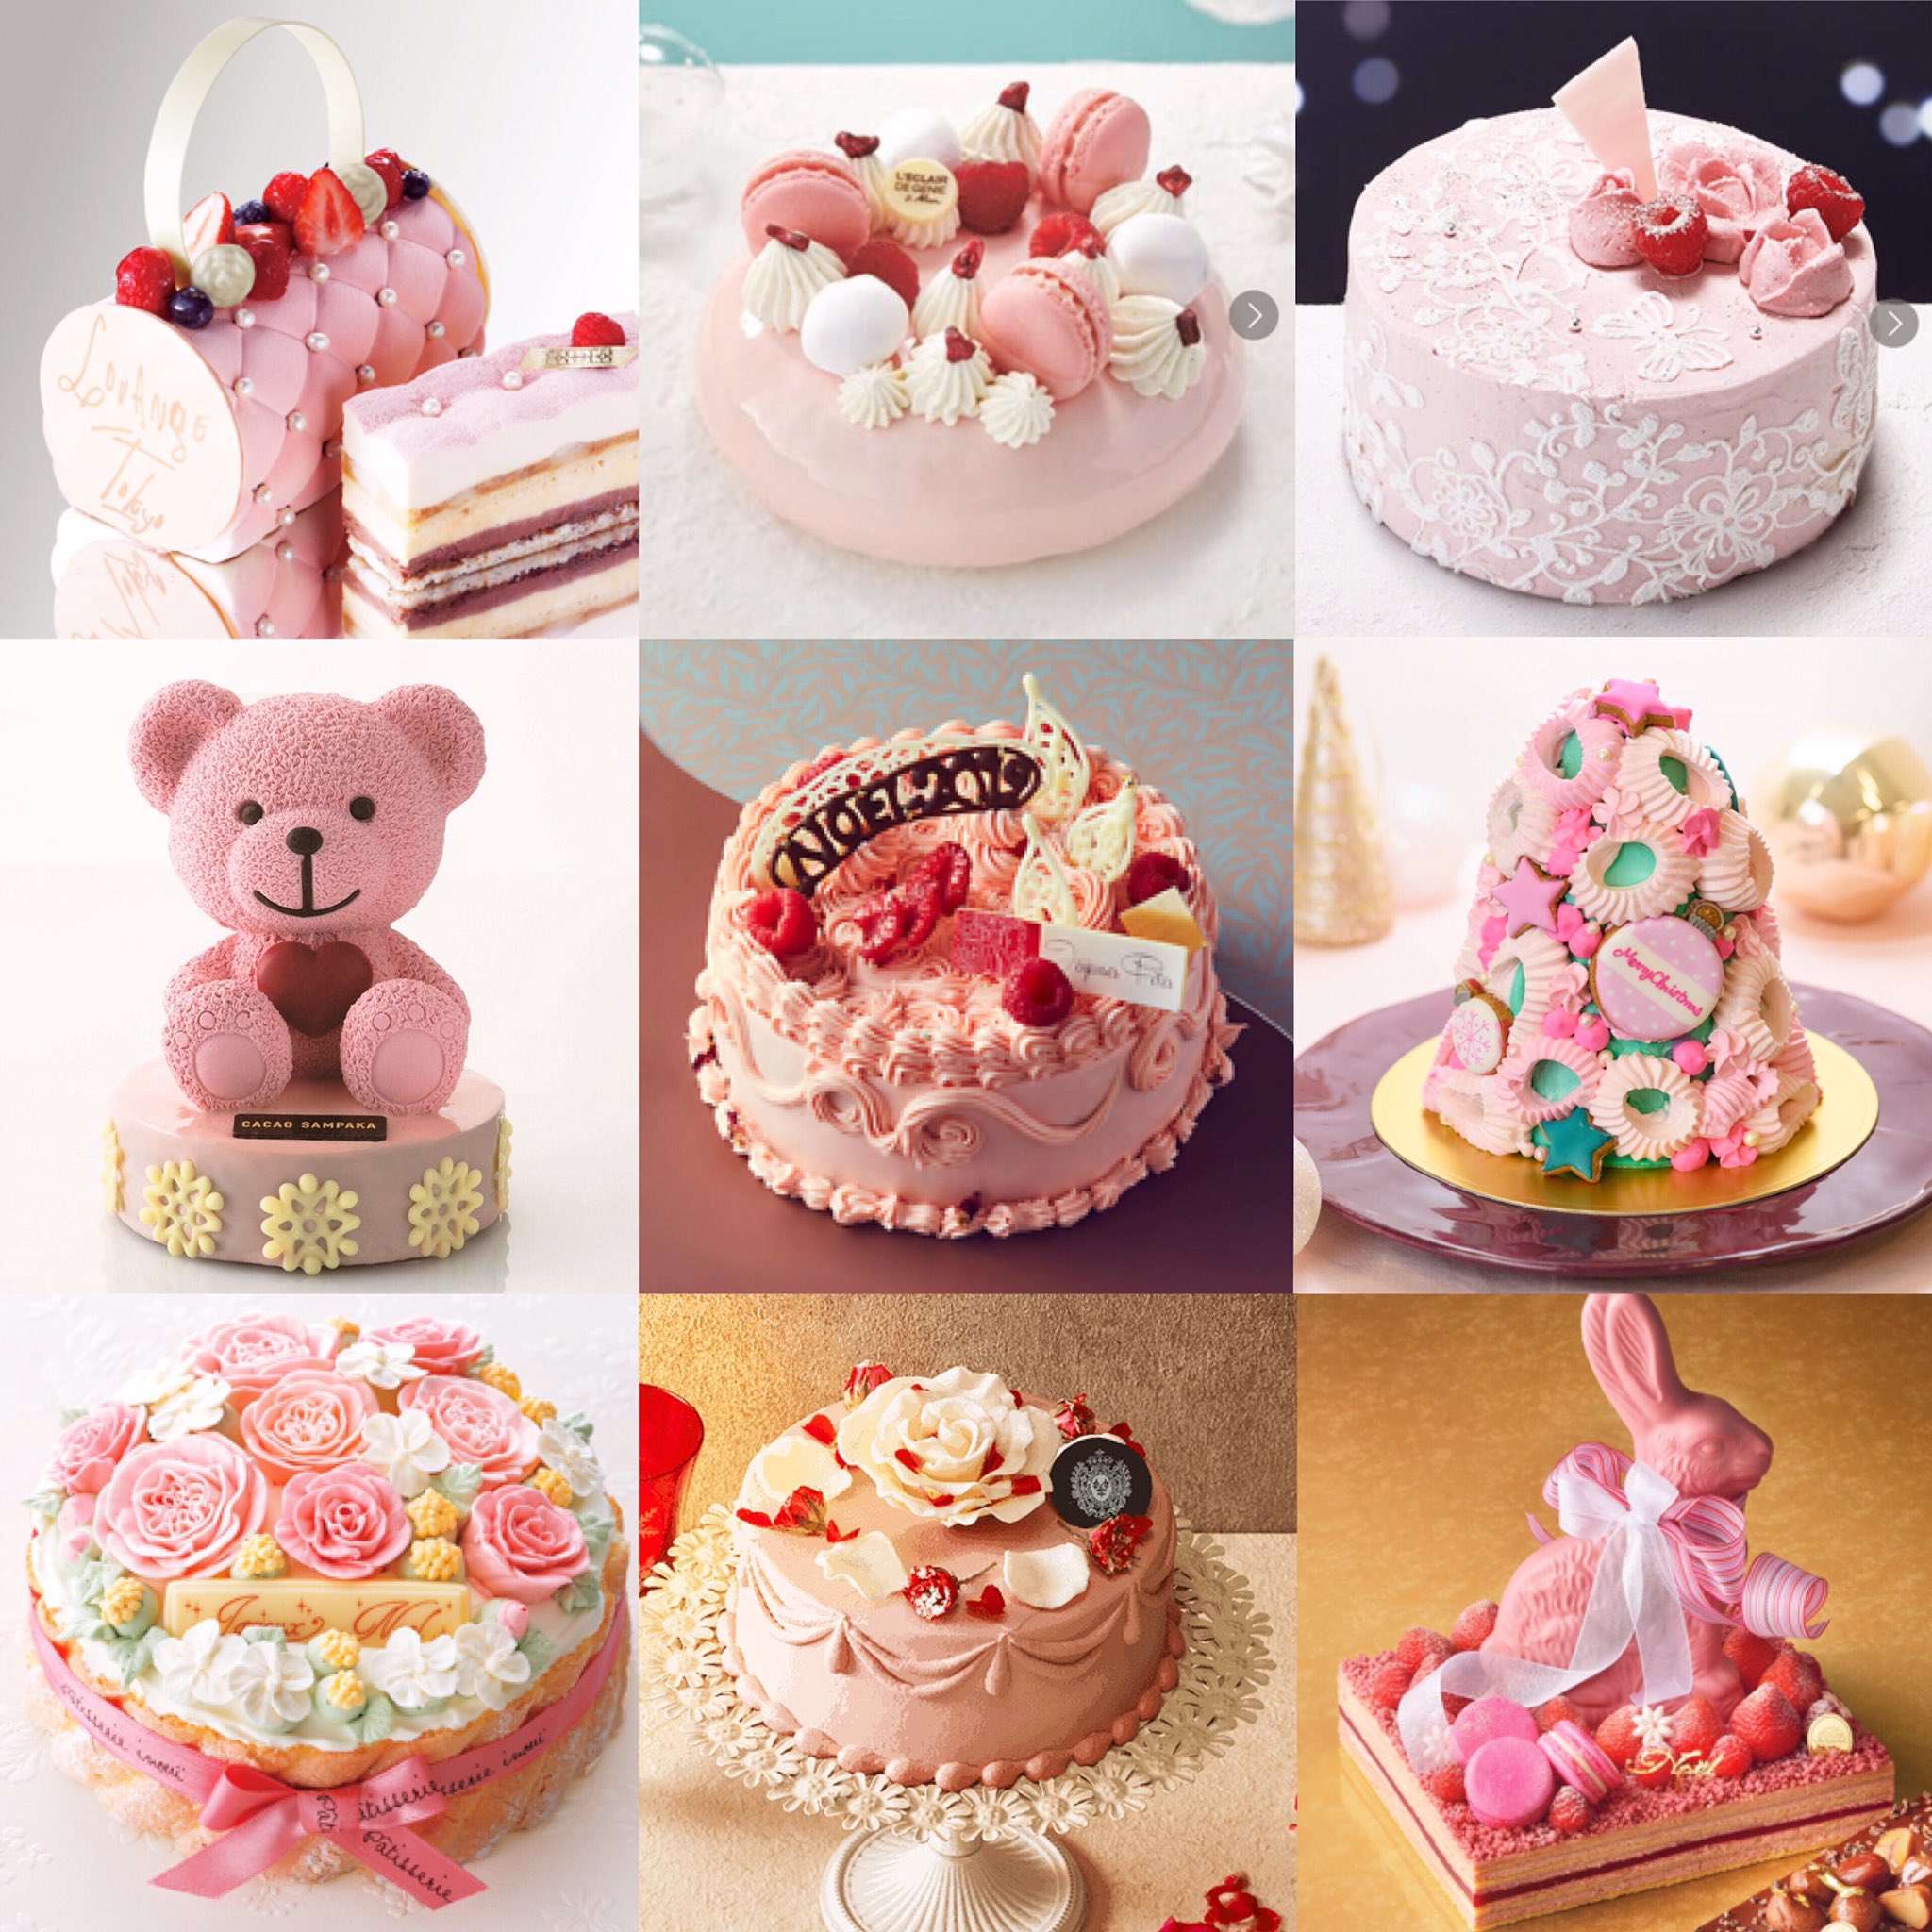 Chisato ピンクのクリスマスケーキ可愛いが過ぎる クリスマスケーキ19 T Co Fe4zsrbqye Twitter